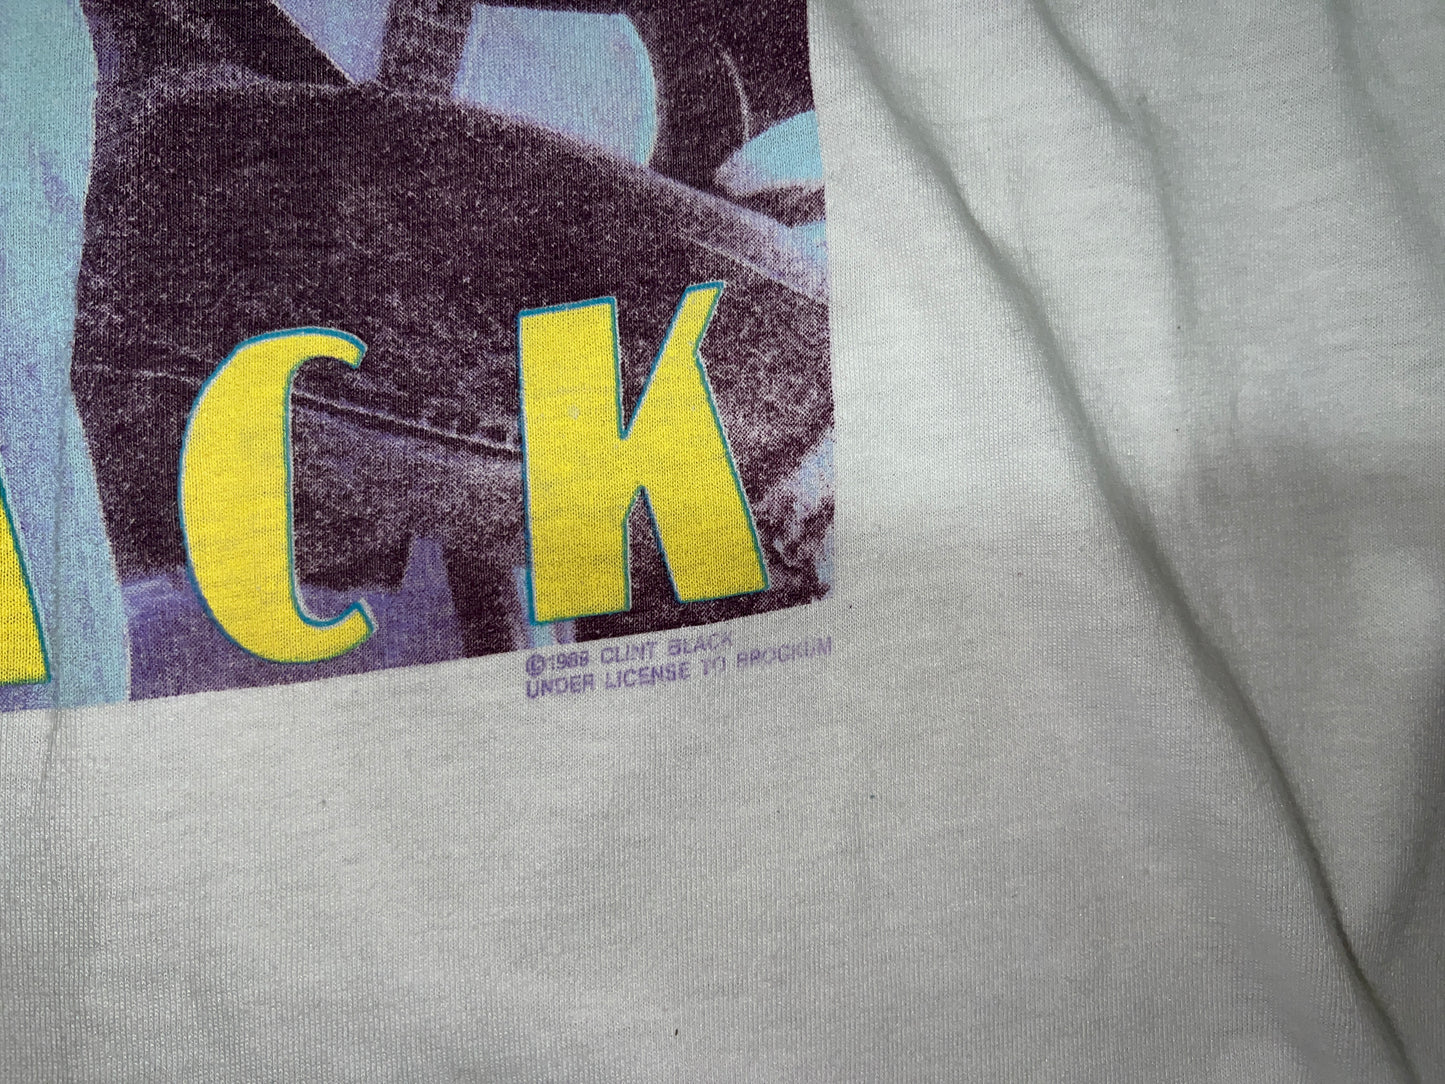 Vintage 1988 Clint Black T-Shirt